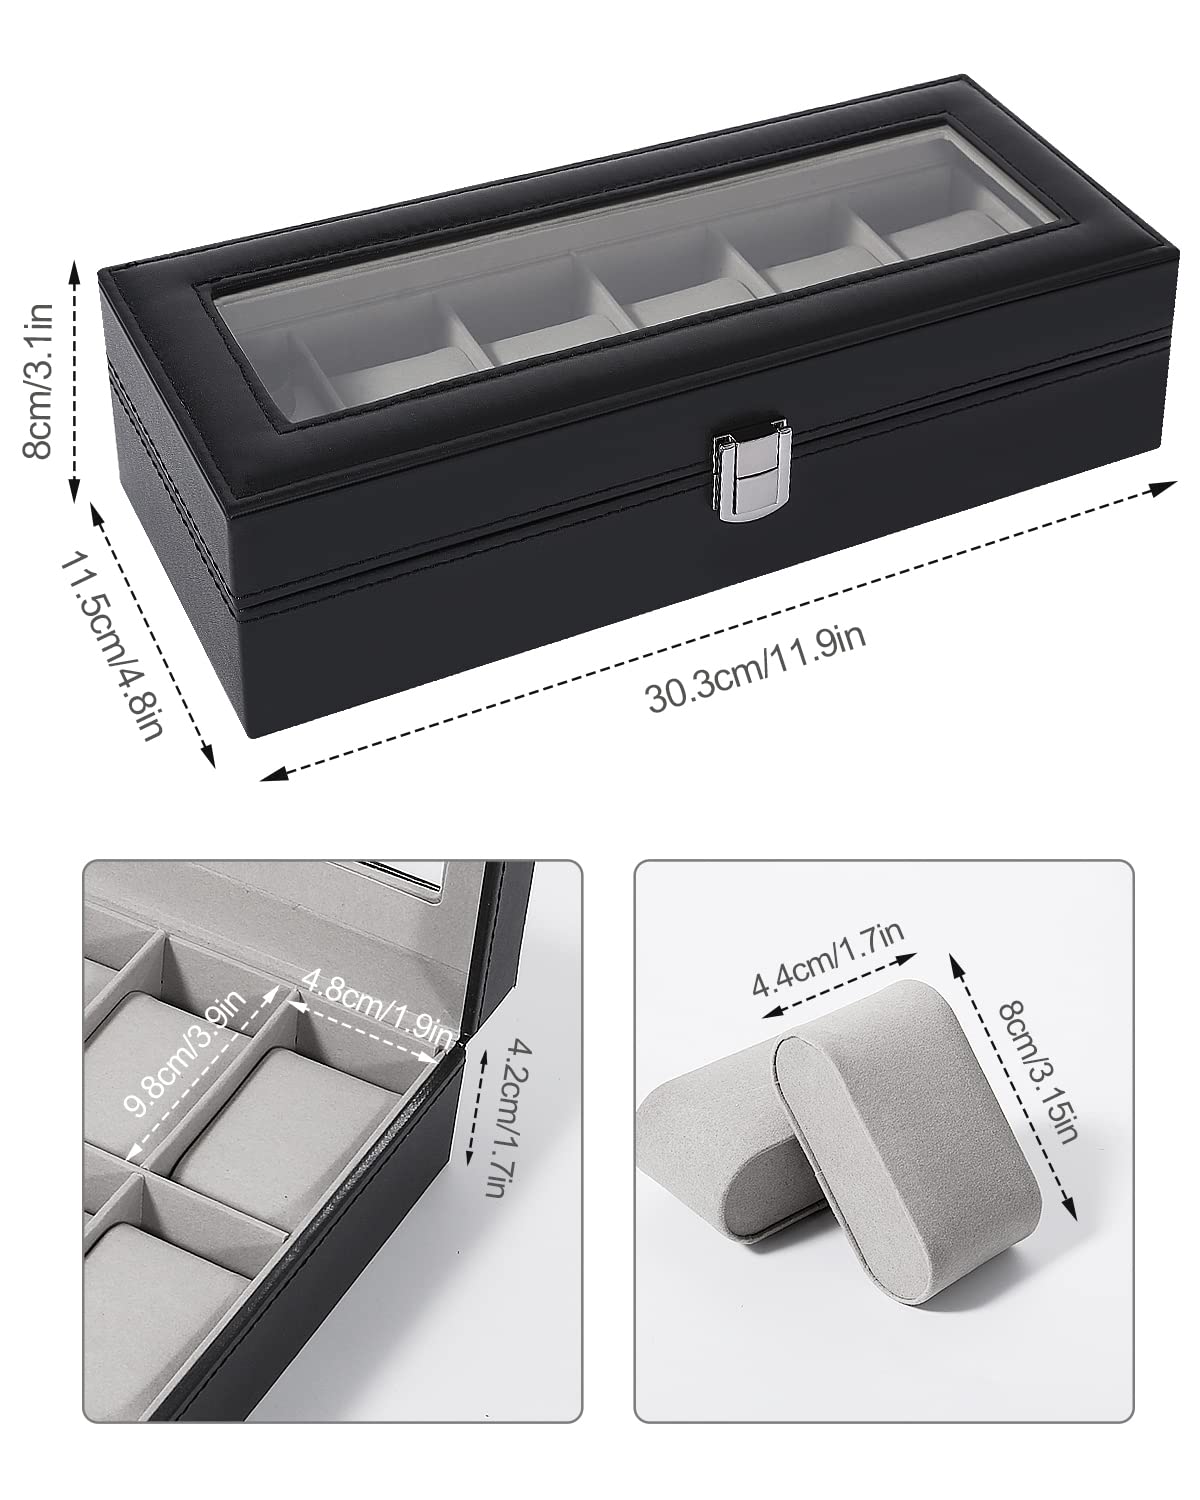 Uten Watch Boxes 6 Slots, Watch Display Storage Box PU Jewelry Collection Case Organiser Holder